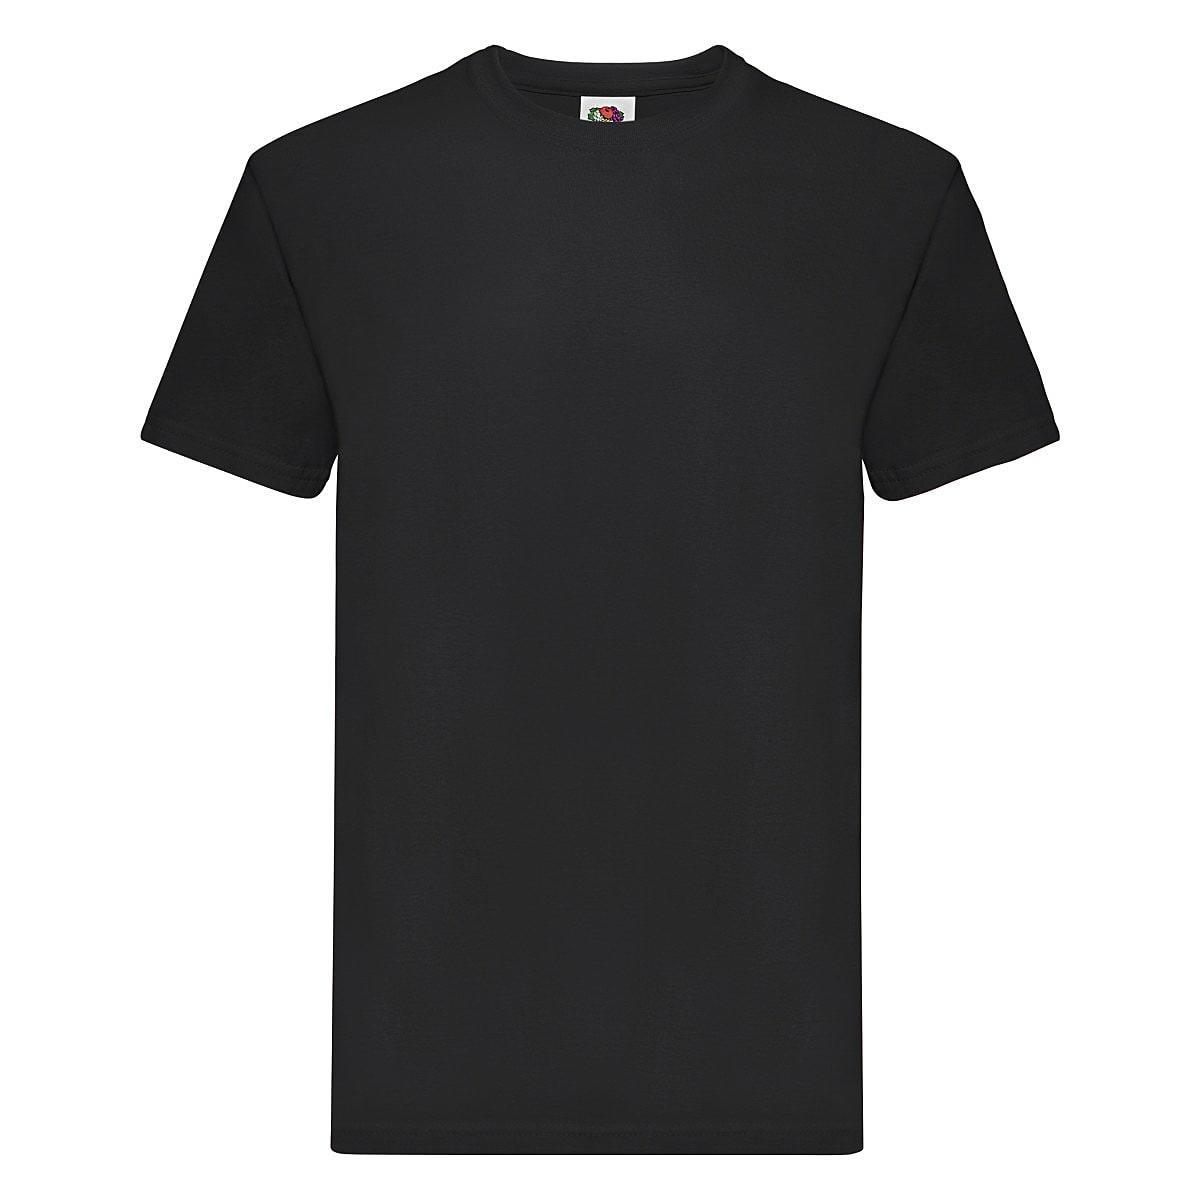 Fruit Of The Loom Super Premium T-Shirt in Black (Product Code: 61044)